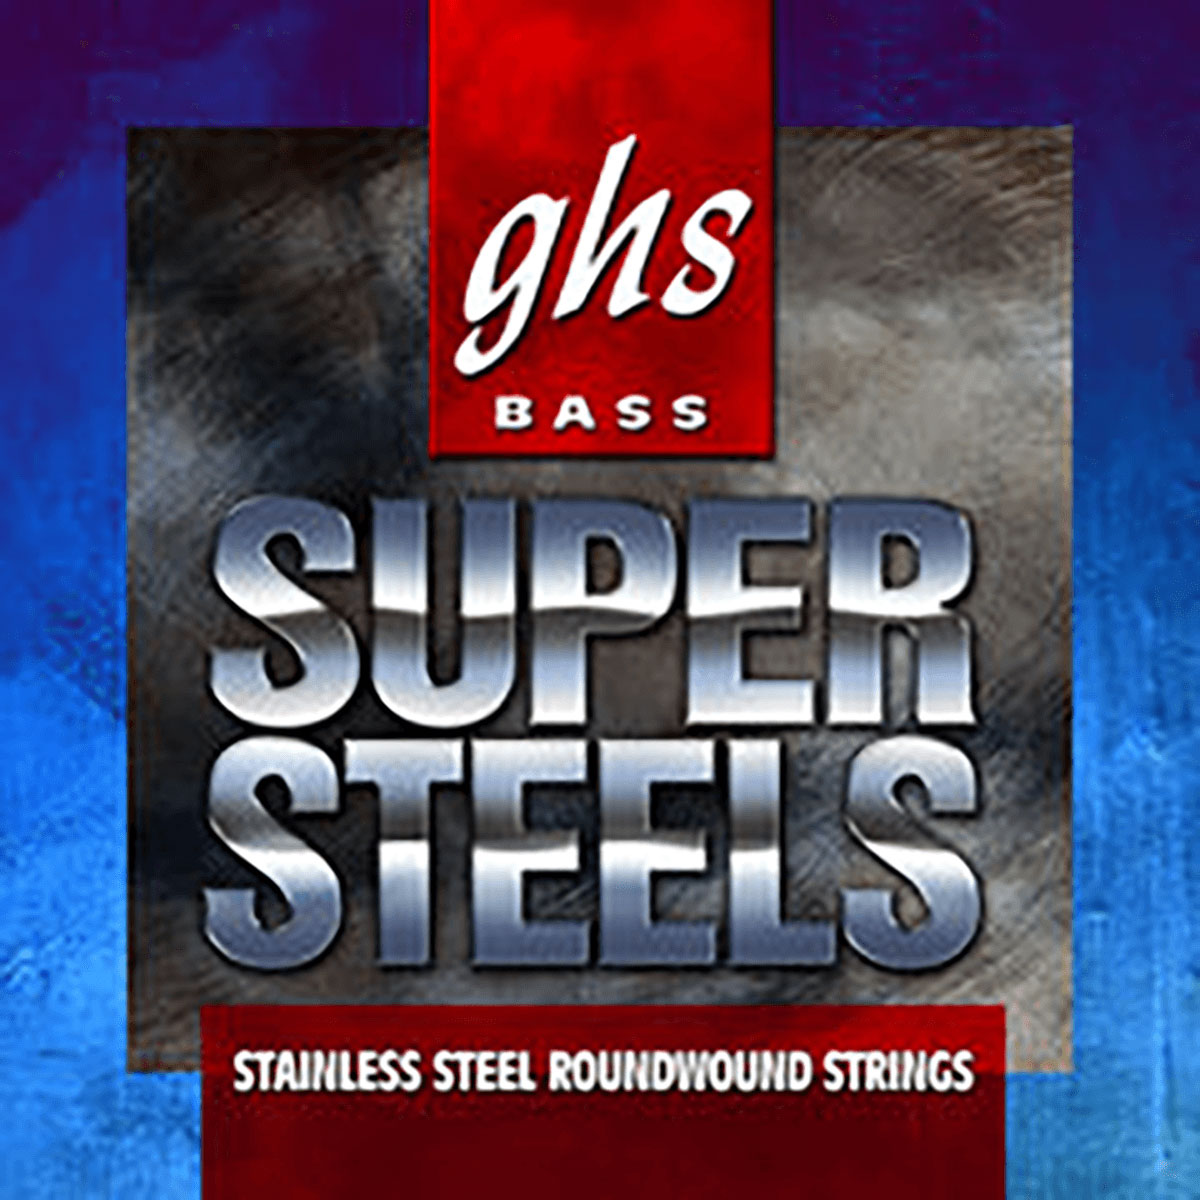 GHS 5M-STB SUPER STEELS MEDIUM 5C 44-126